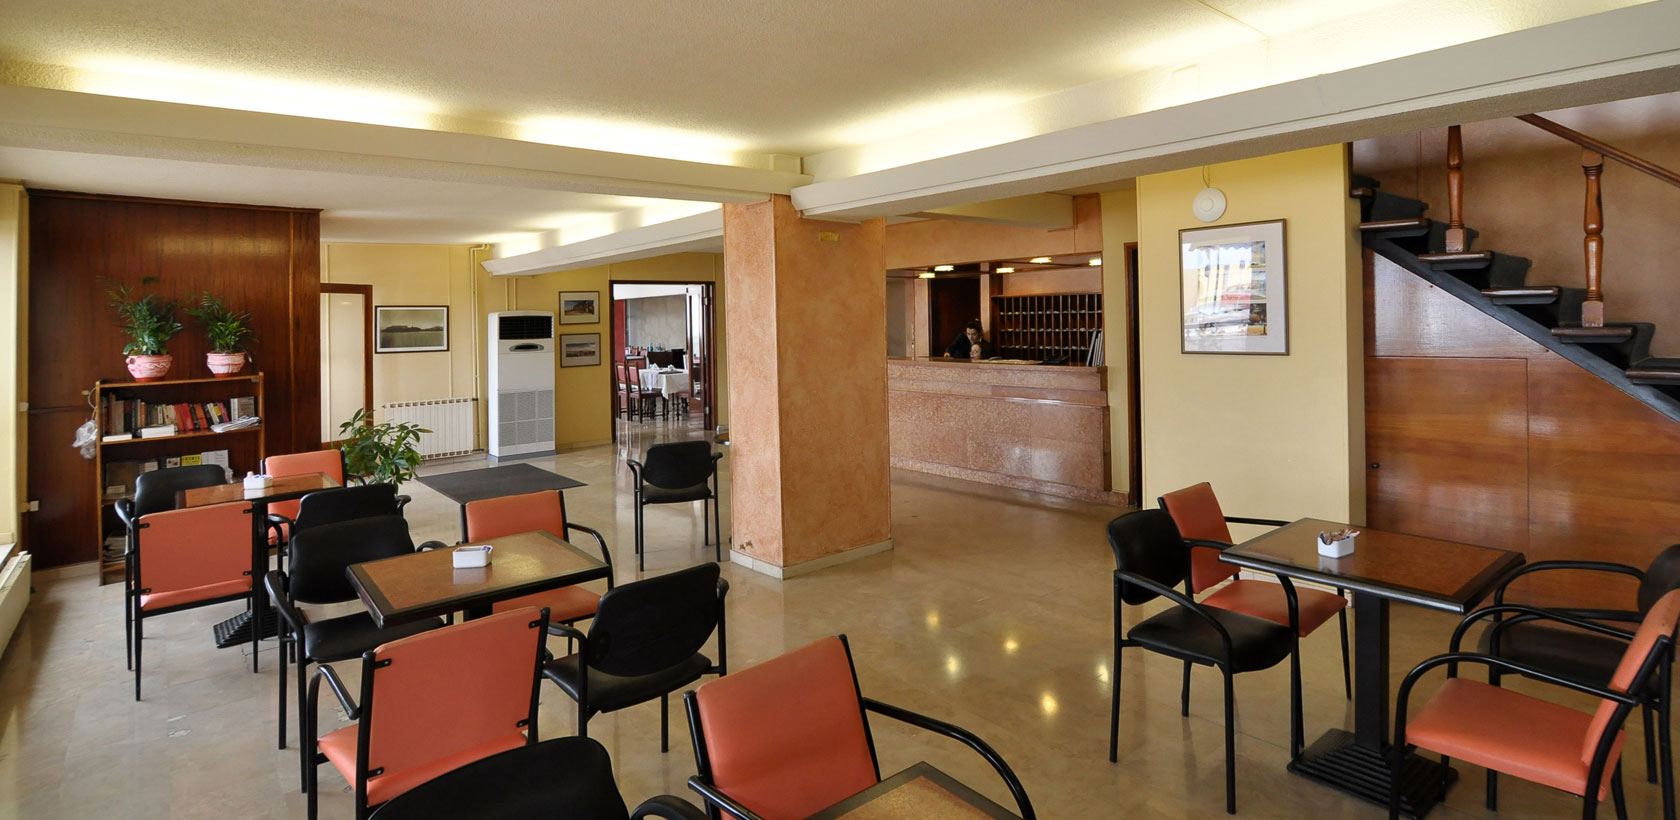 Reception Area of Atlantis Hotel in Corfu Town